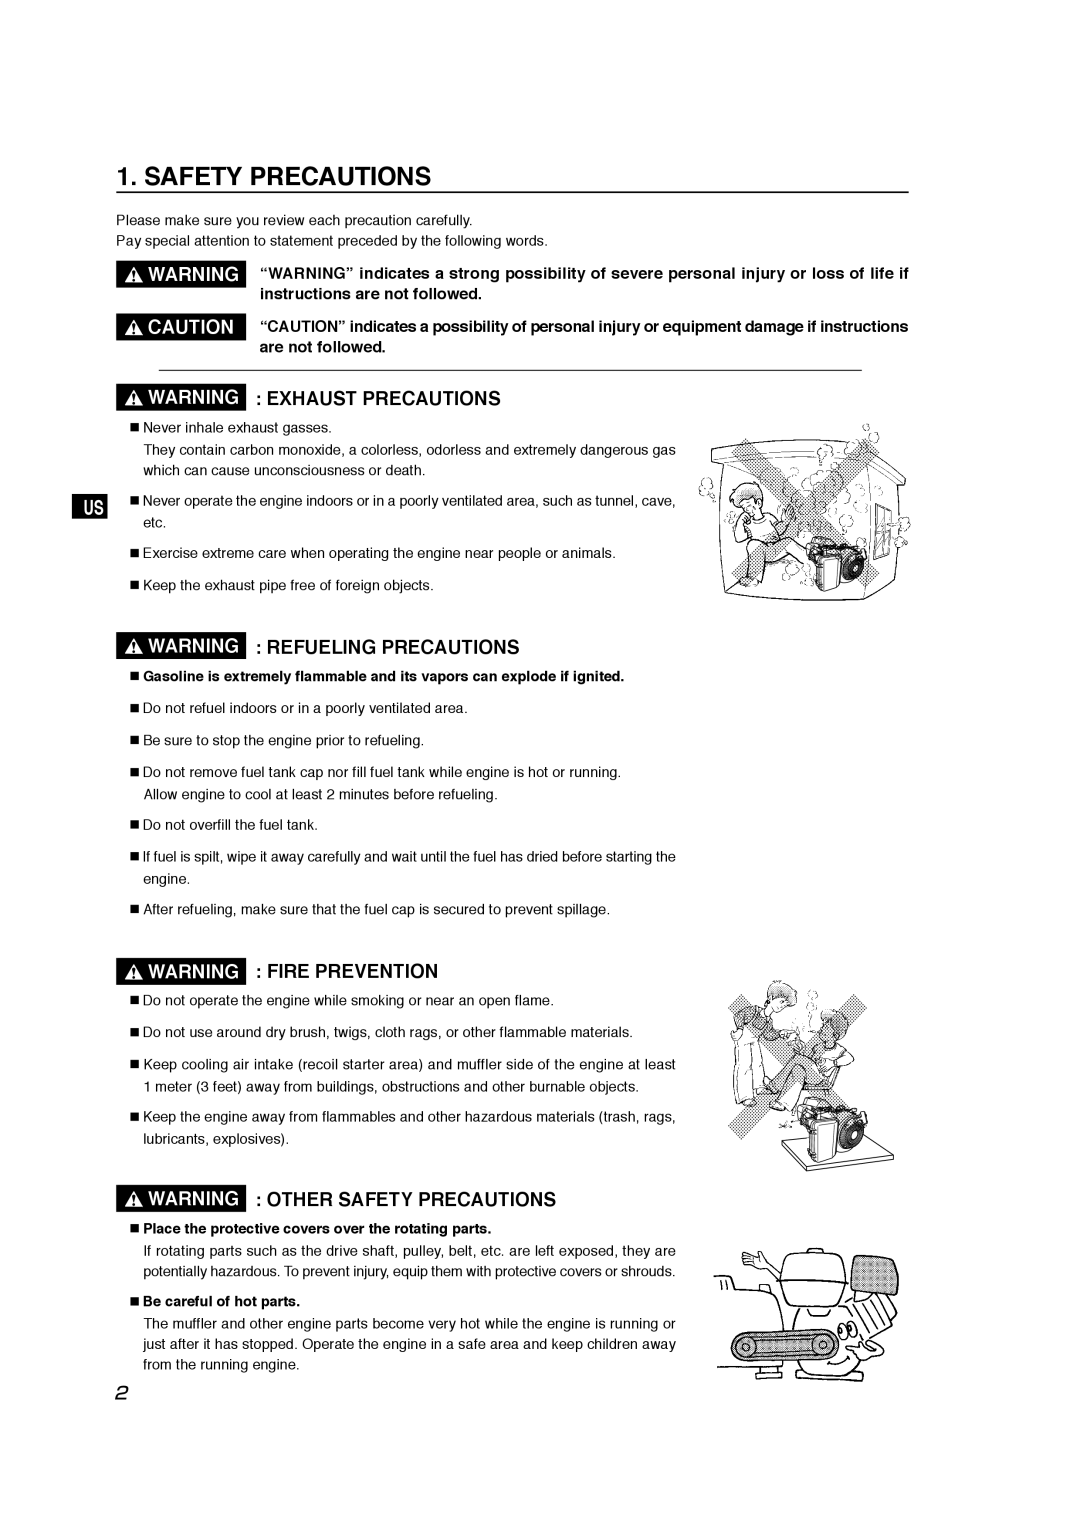 Subaru Robin Power Products EX30 manual Safety Precautions, Warning Exhaust Precautions, Warning Refueling Precautions 